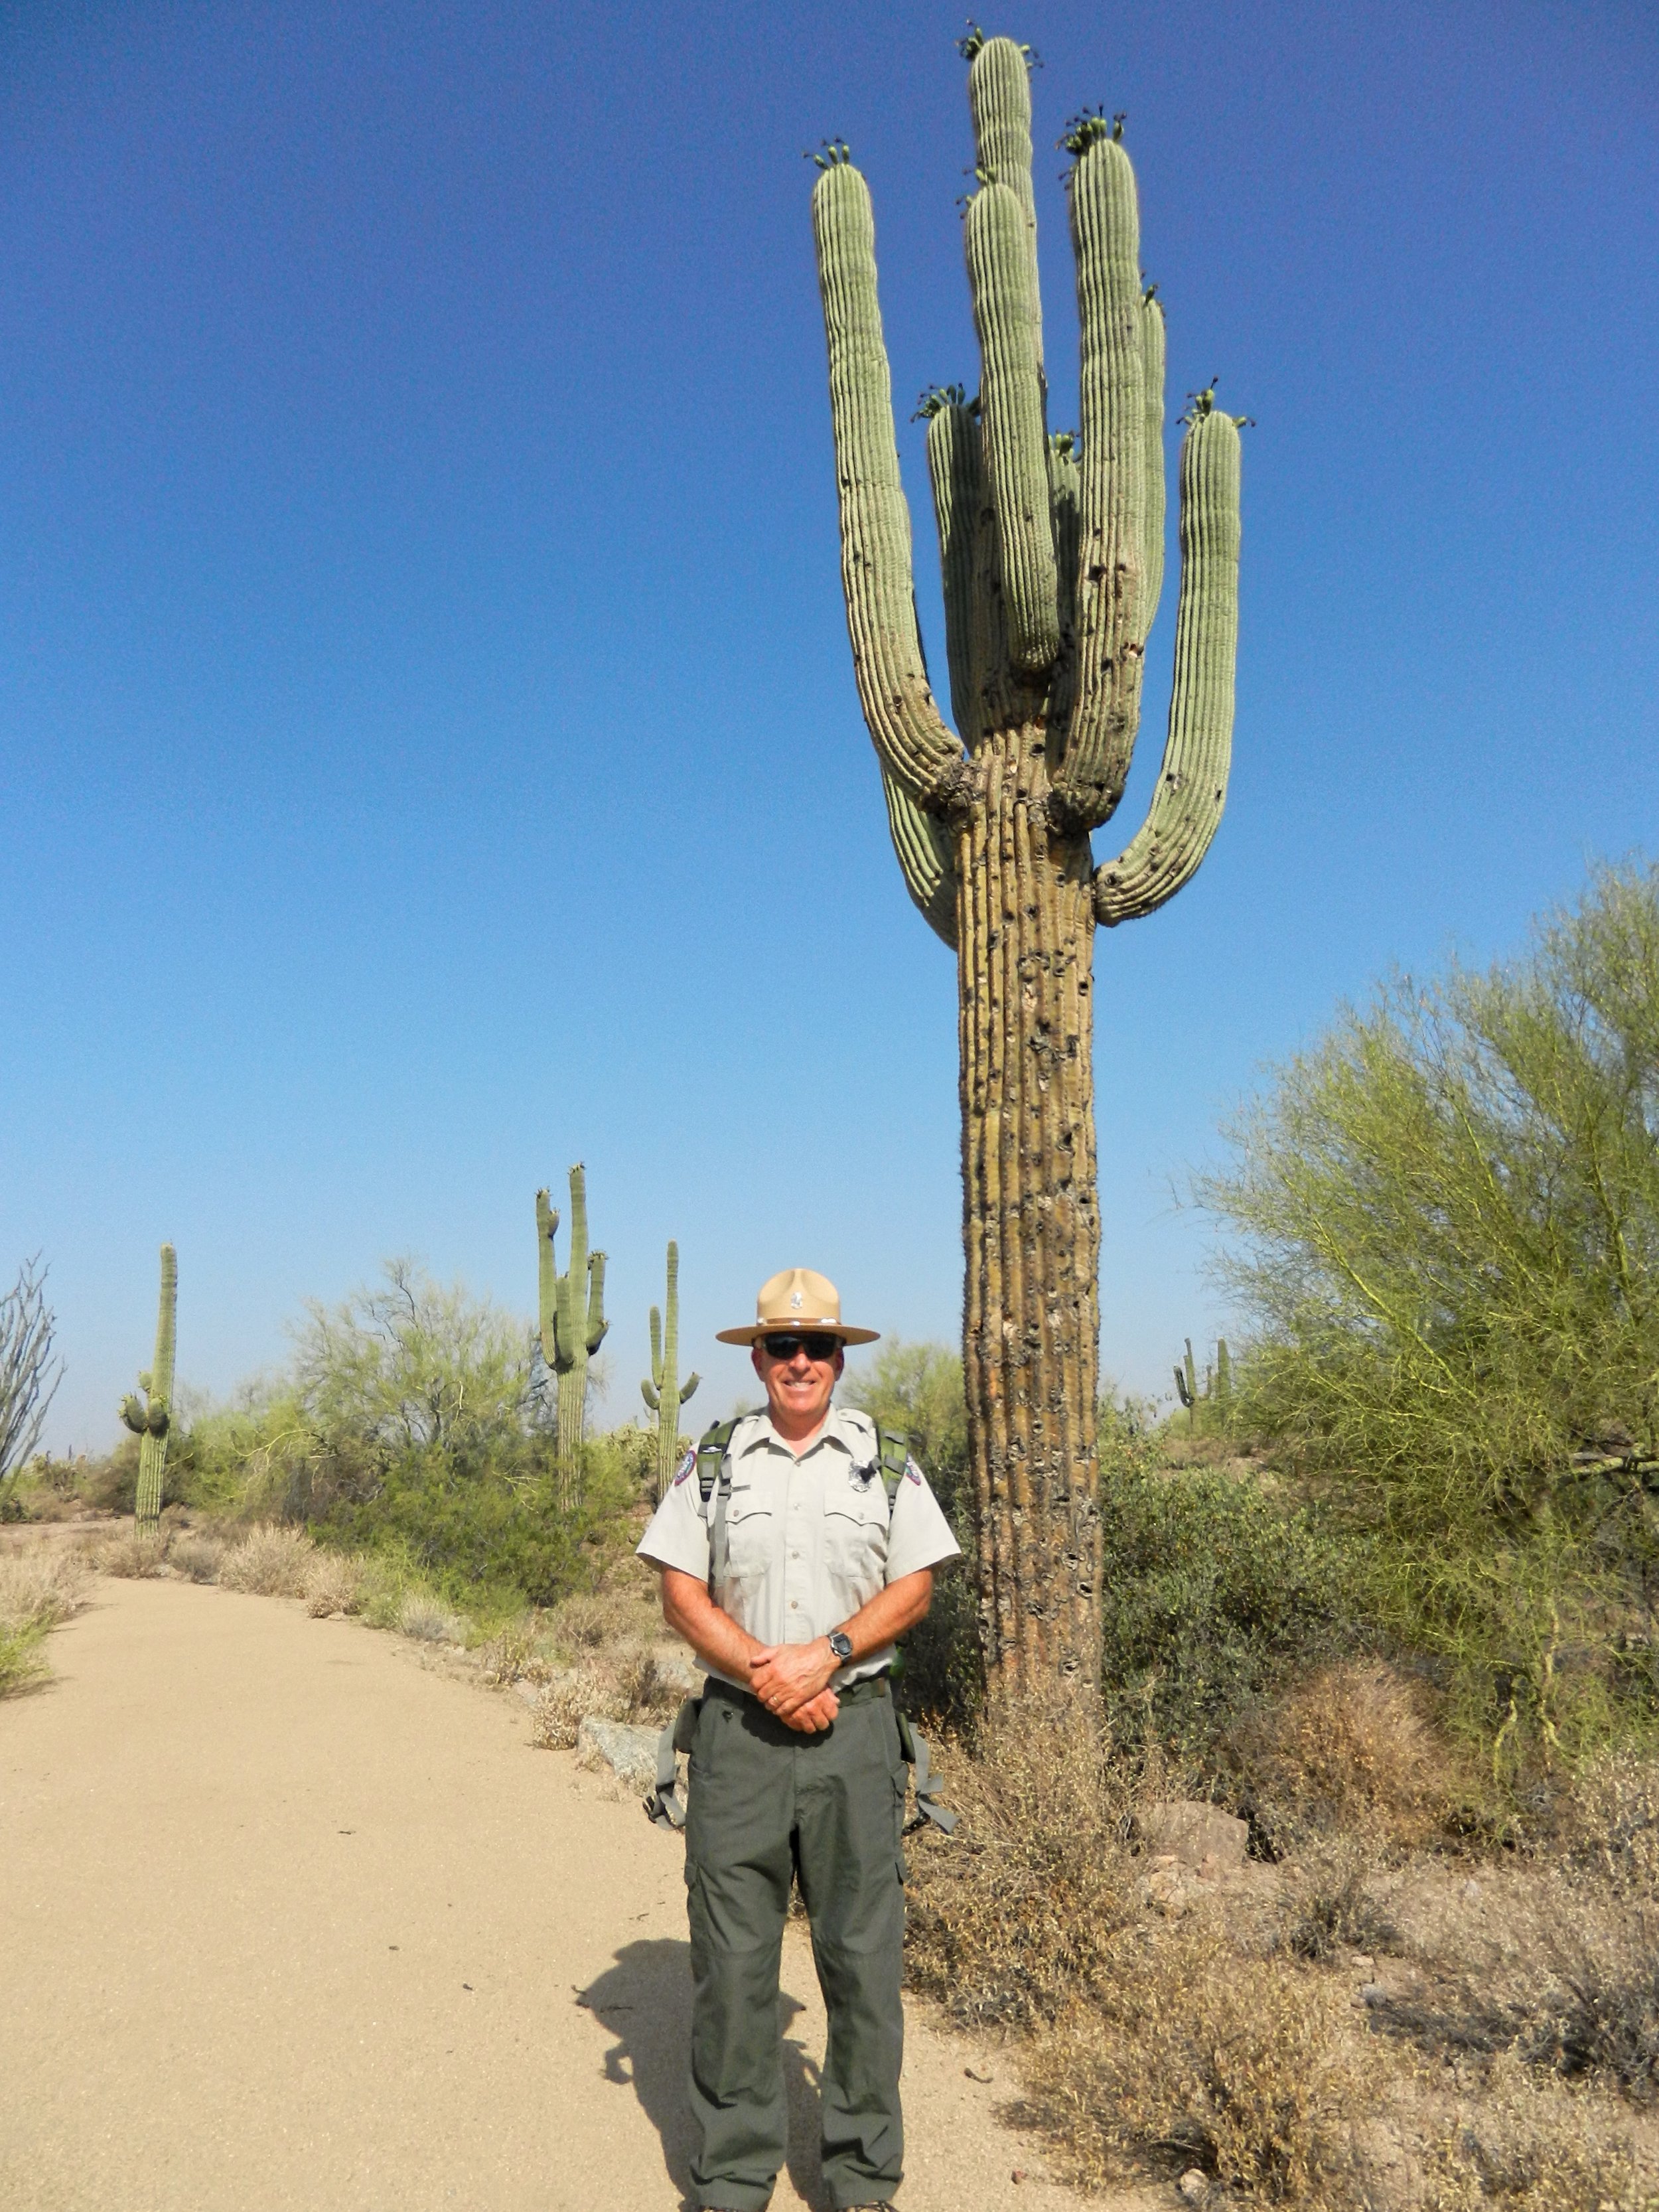 Ranger B at the Usery Mountain Regional Park in Phoenix, Arizona.jpg